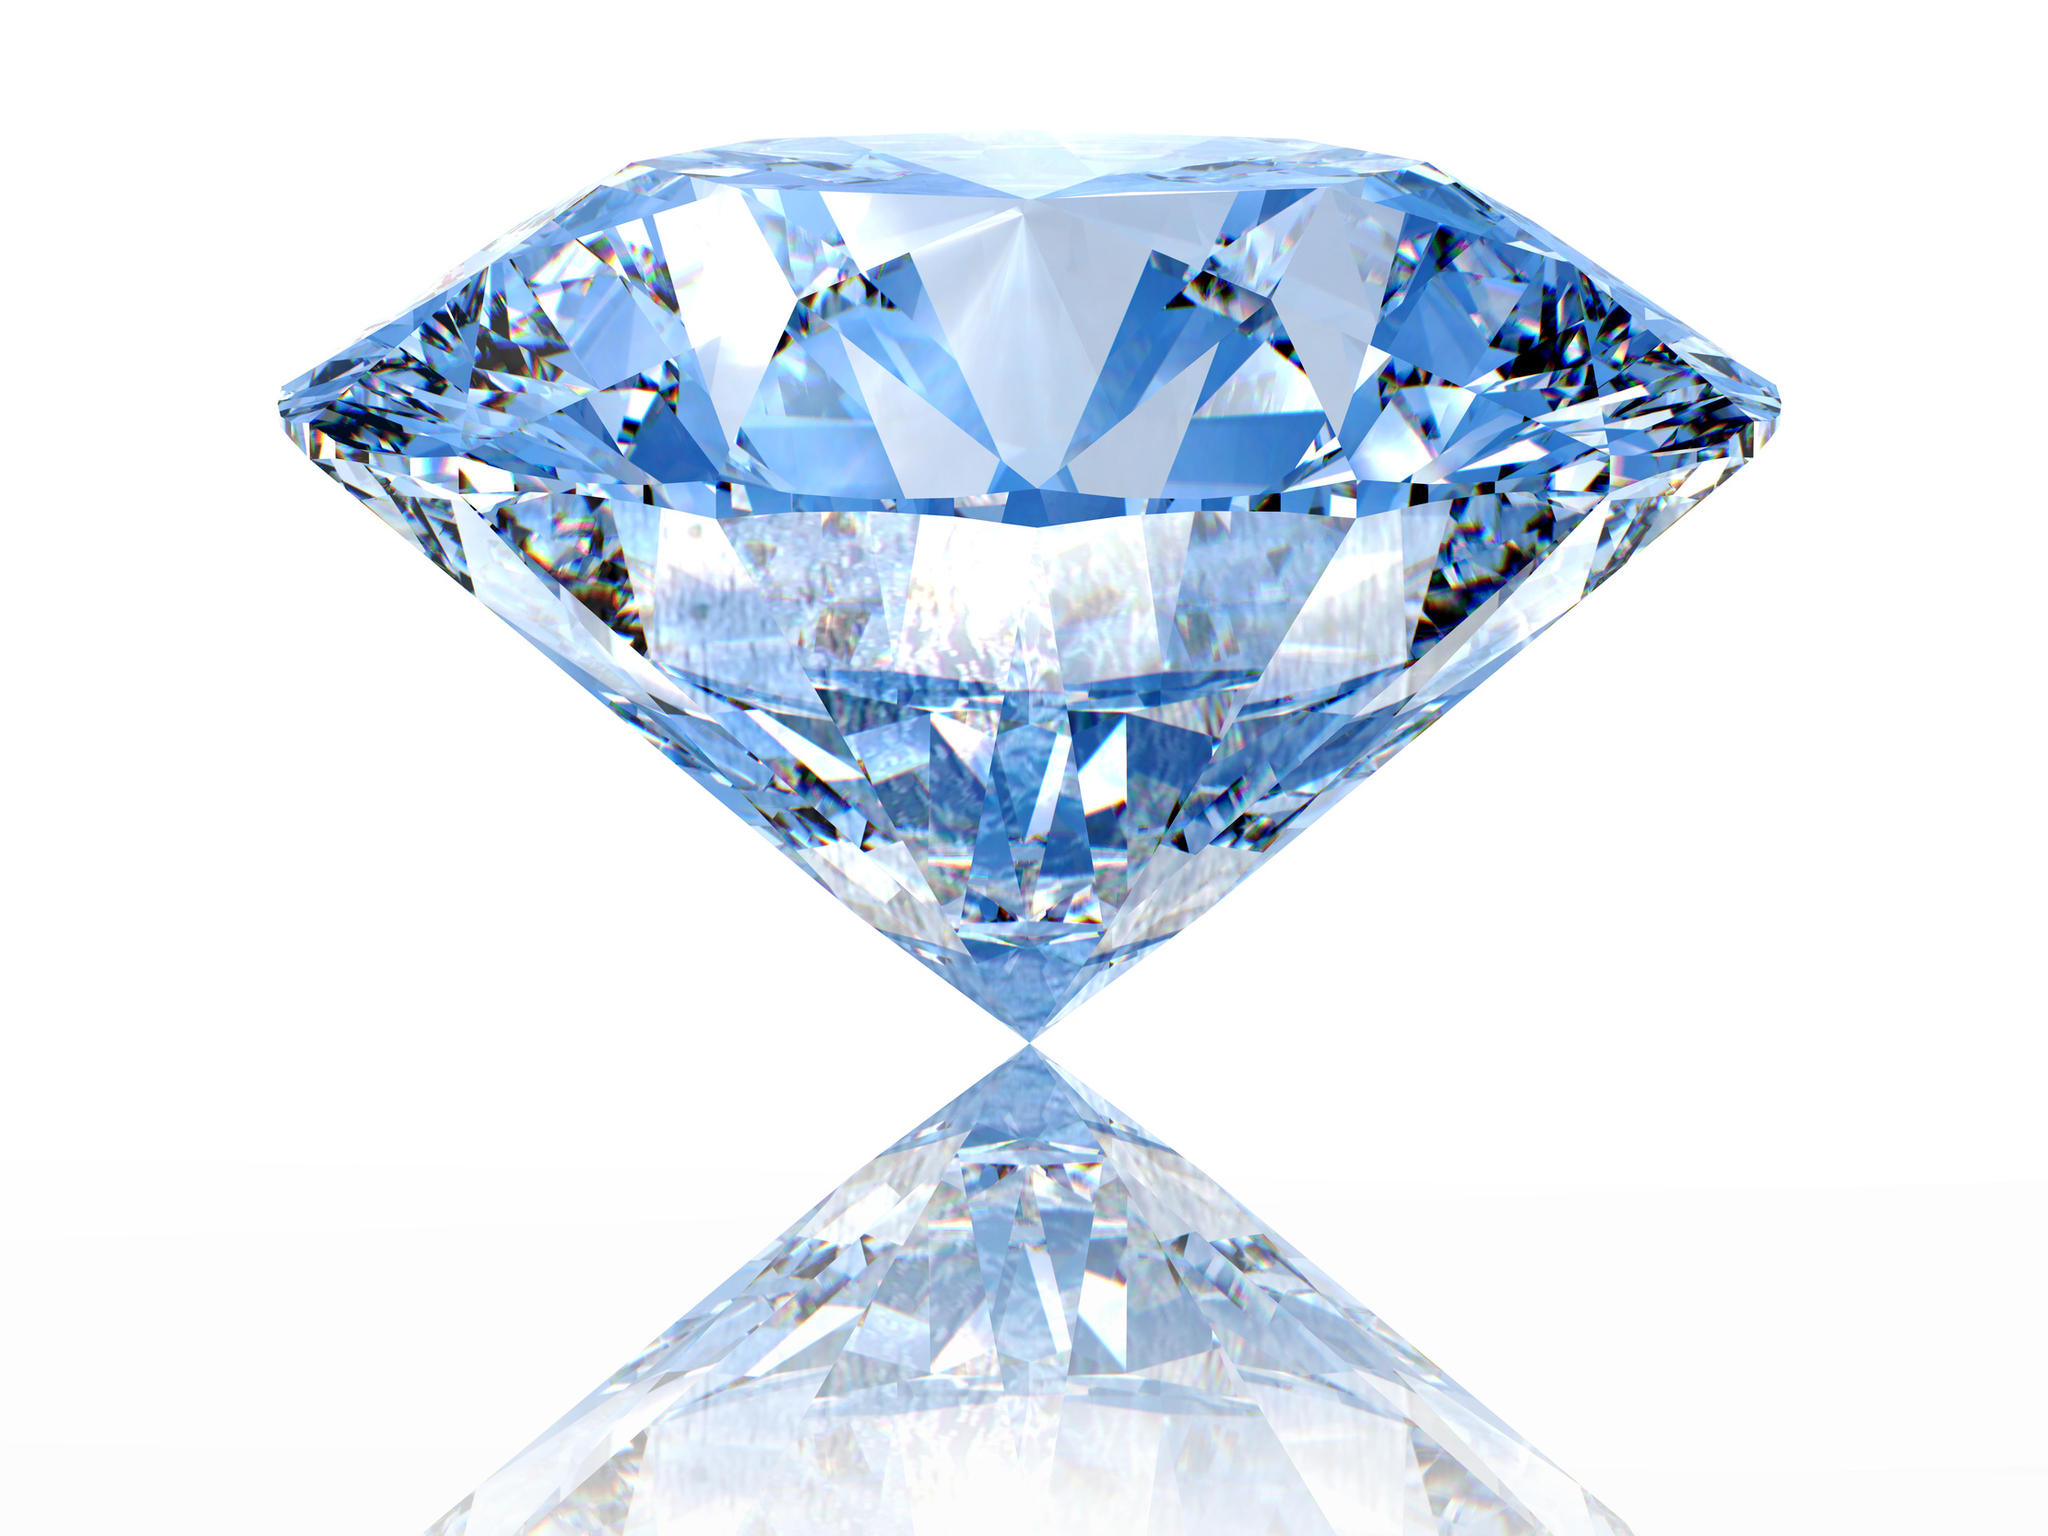 Diamond Capital Funding – Diamonds are made under pressure